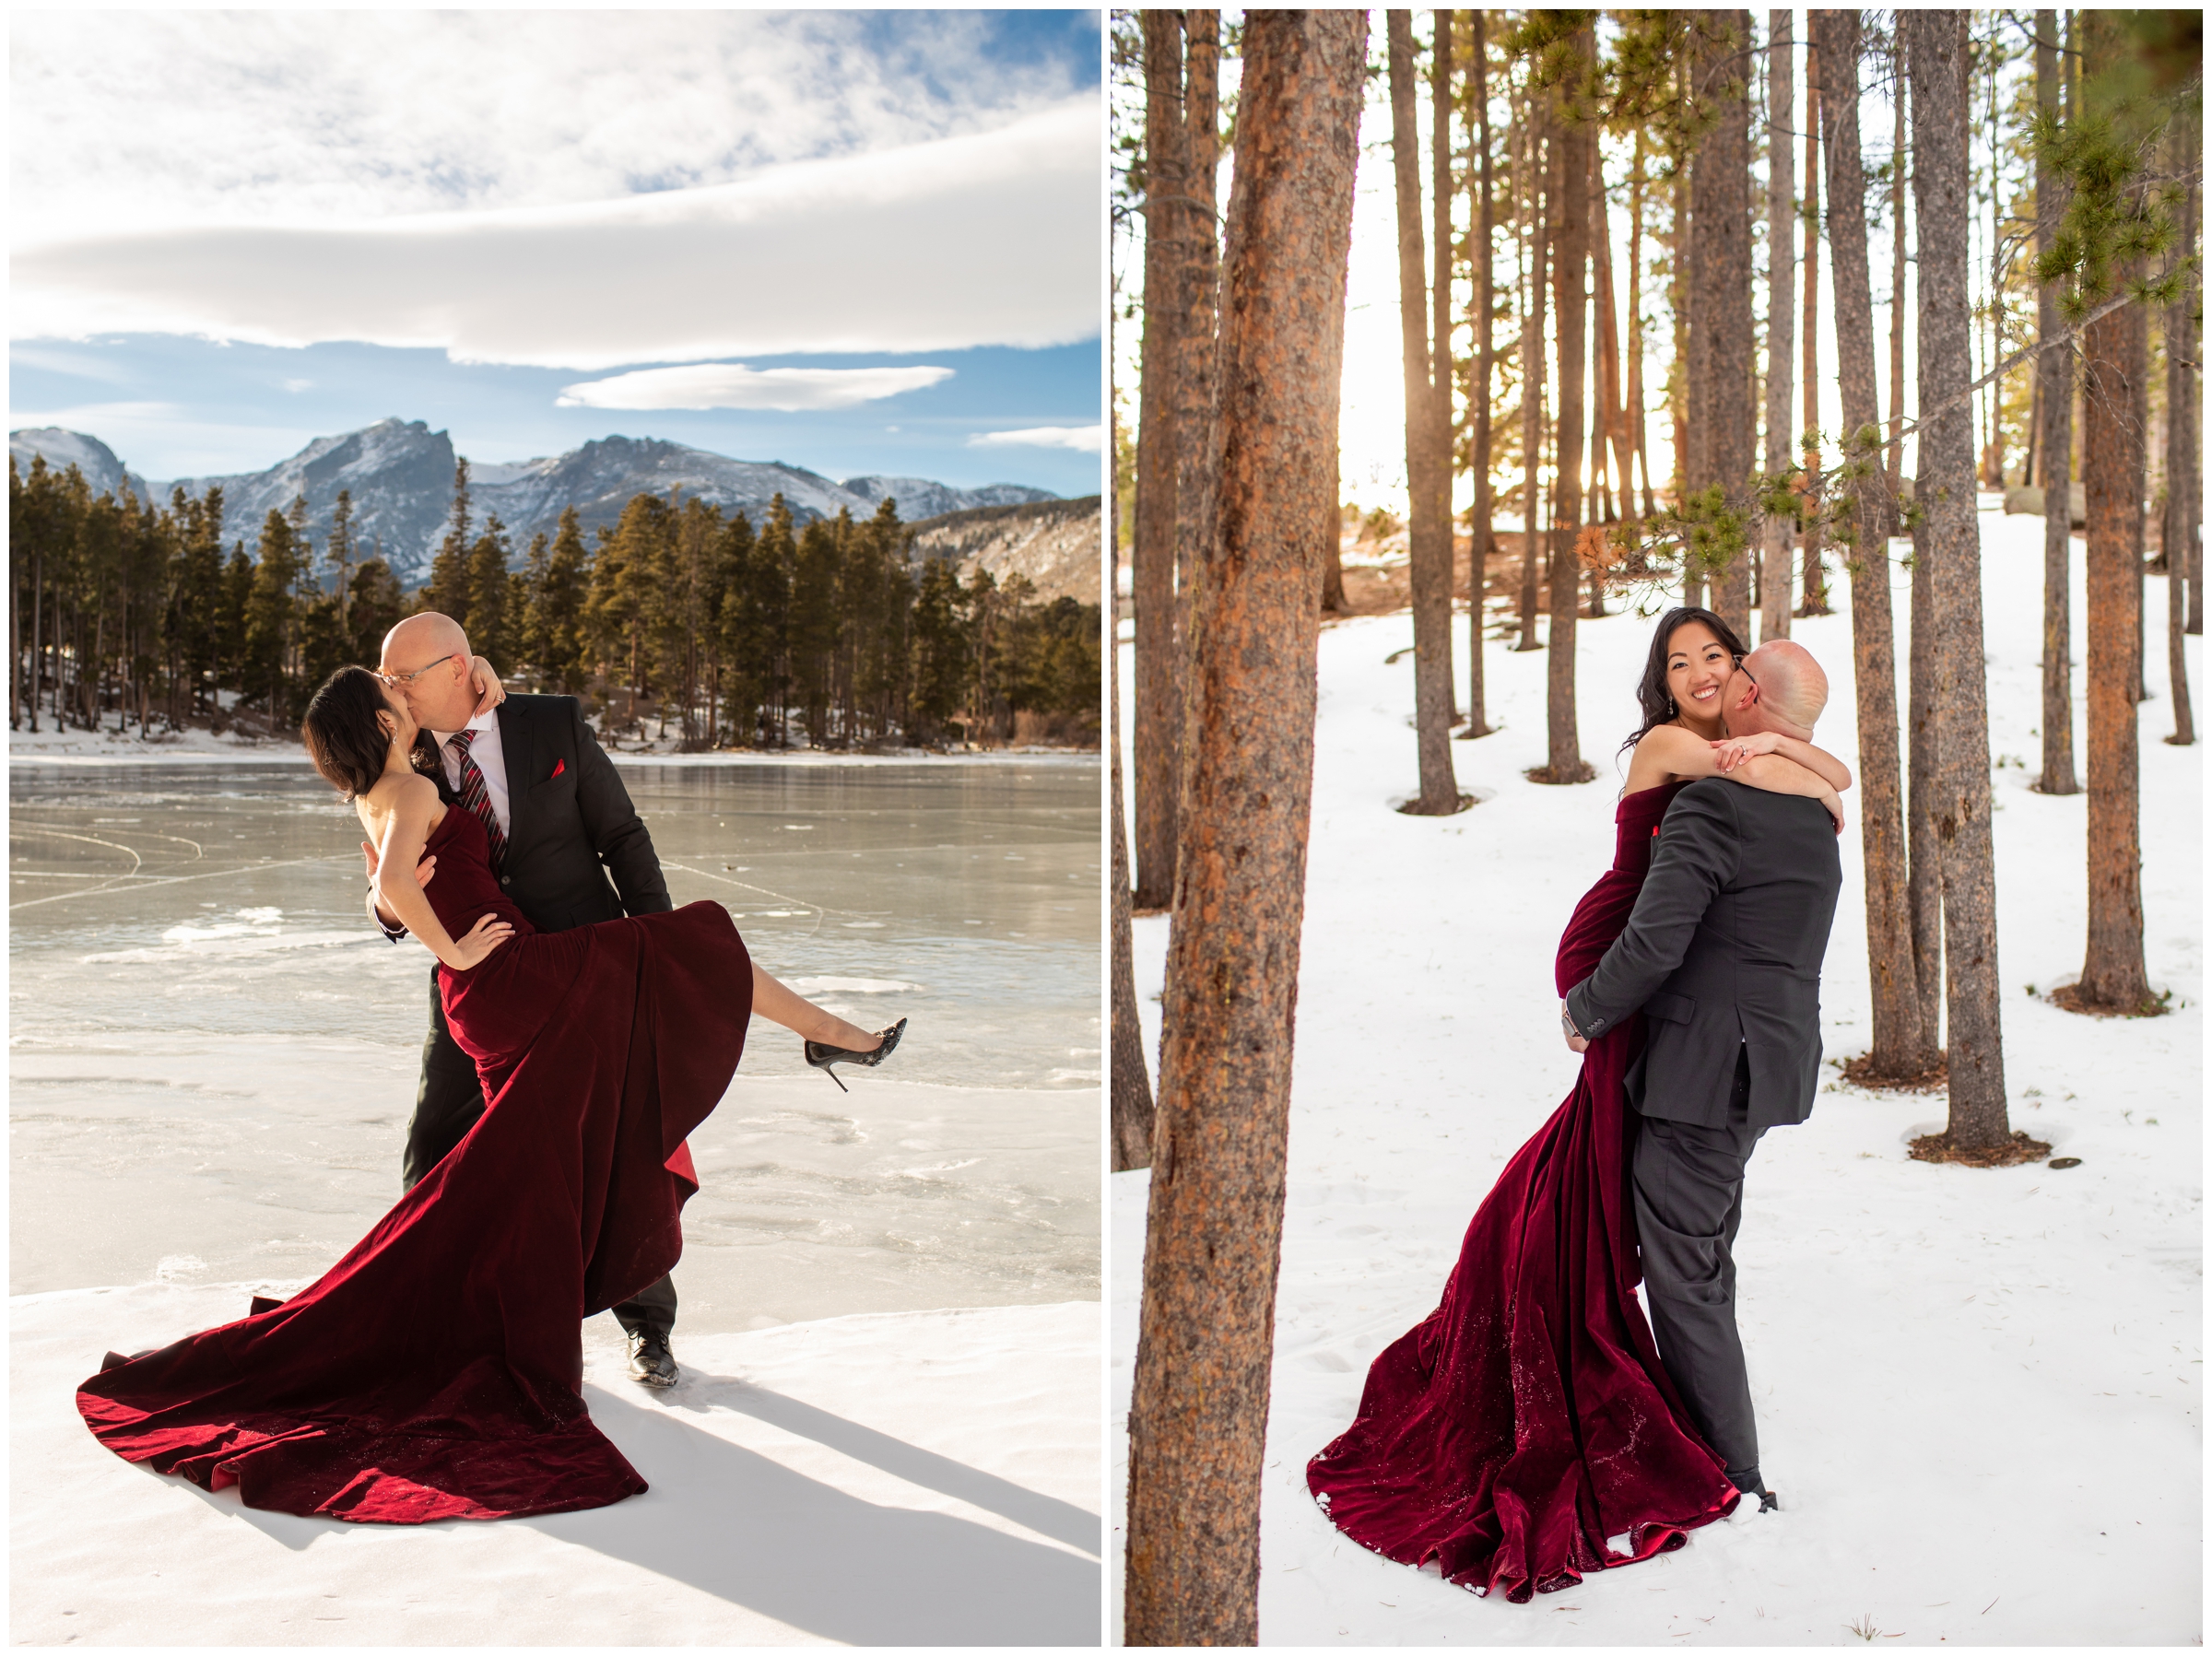 RMNP Winter couples photos at Sprague Lake by Estes Park elopement wedding photographer Plum Pretty Photography